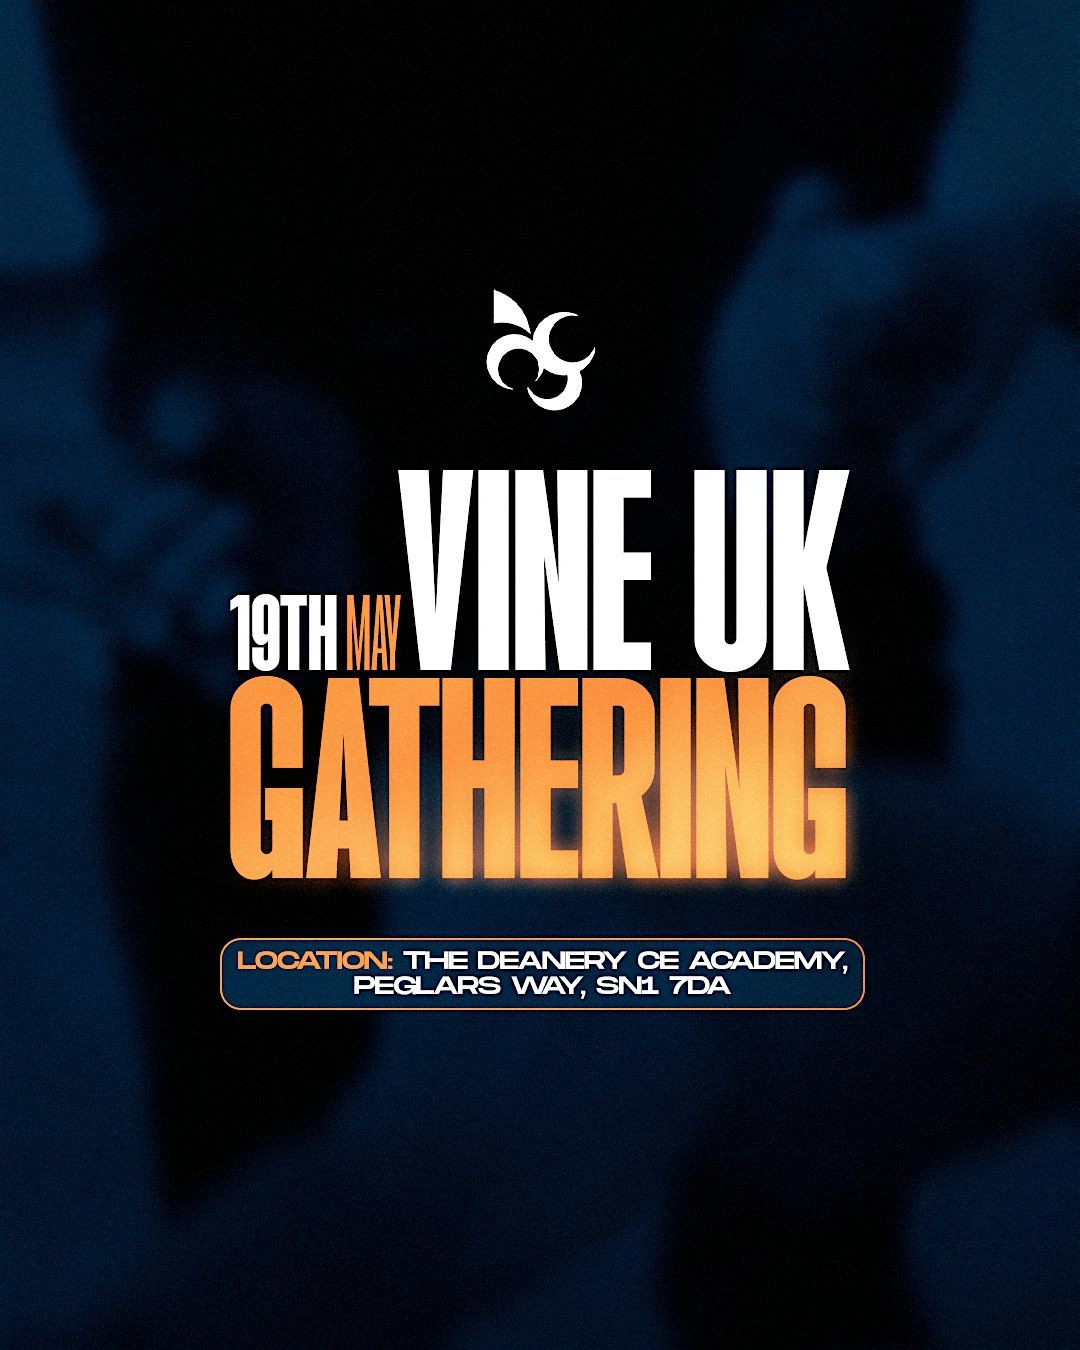 Vine Church UK Gathering